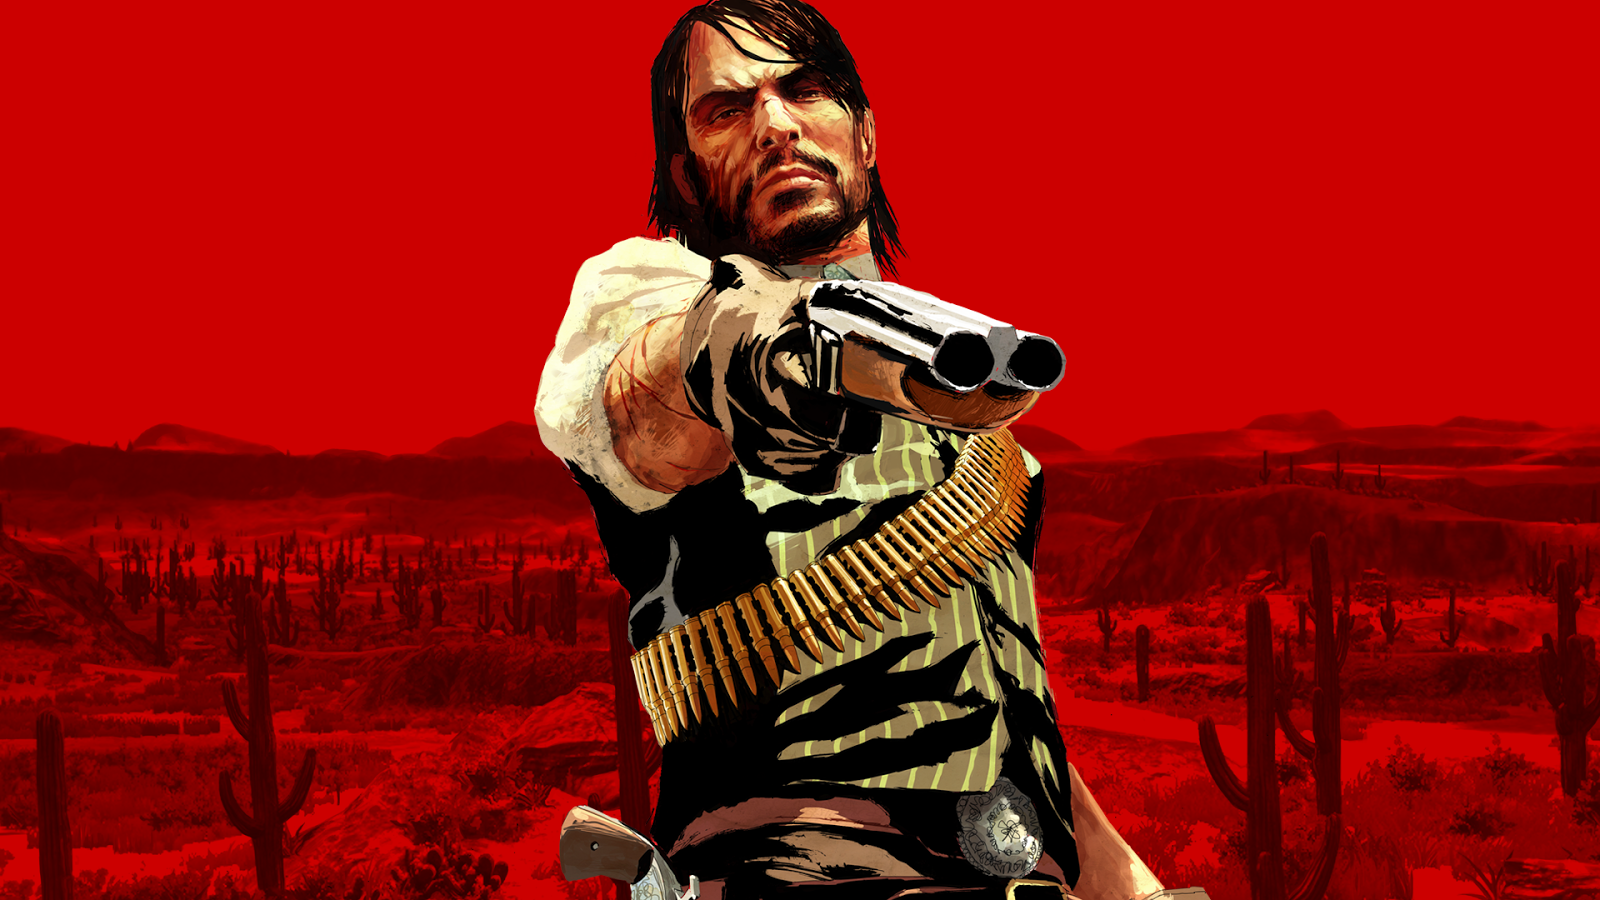 Game Wallpaper Red Dead Redemption